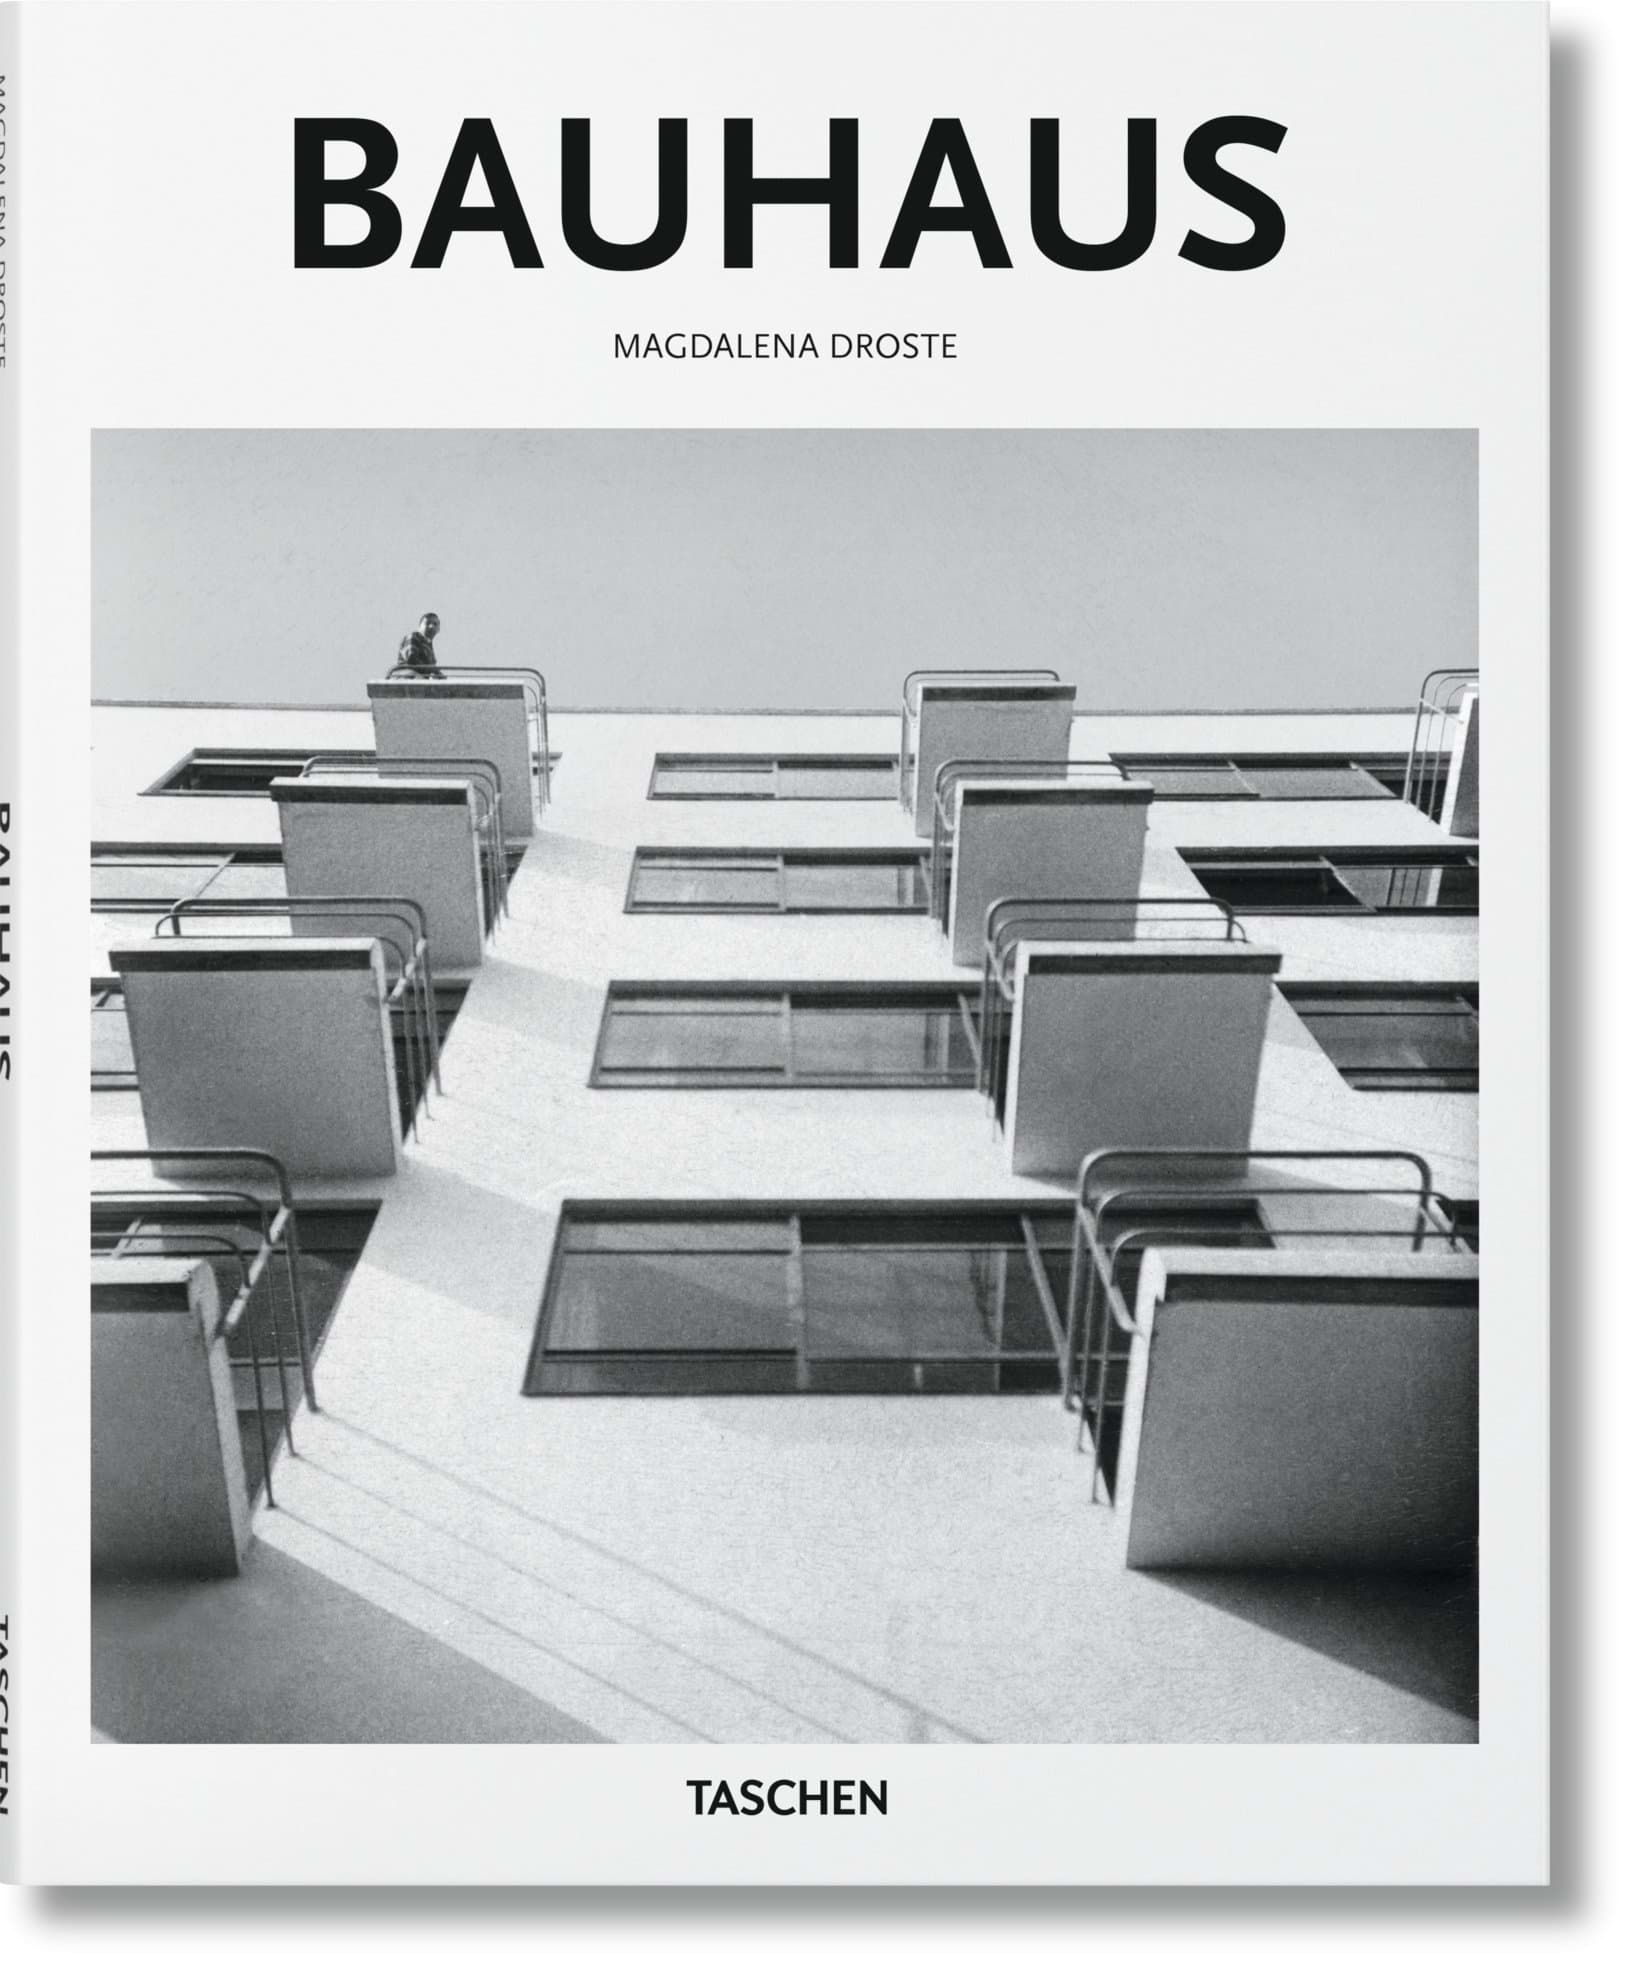 Bauhaus - Designs of the Time